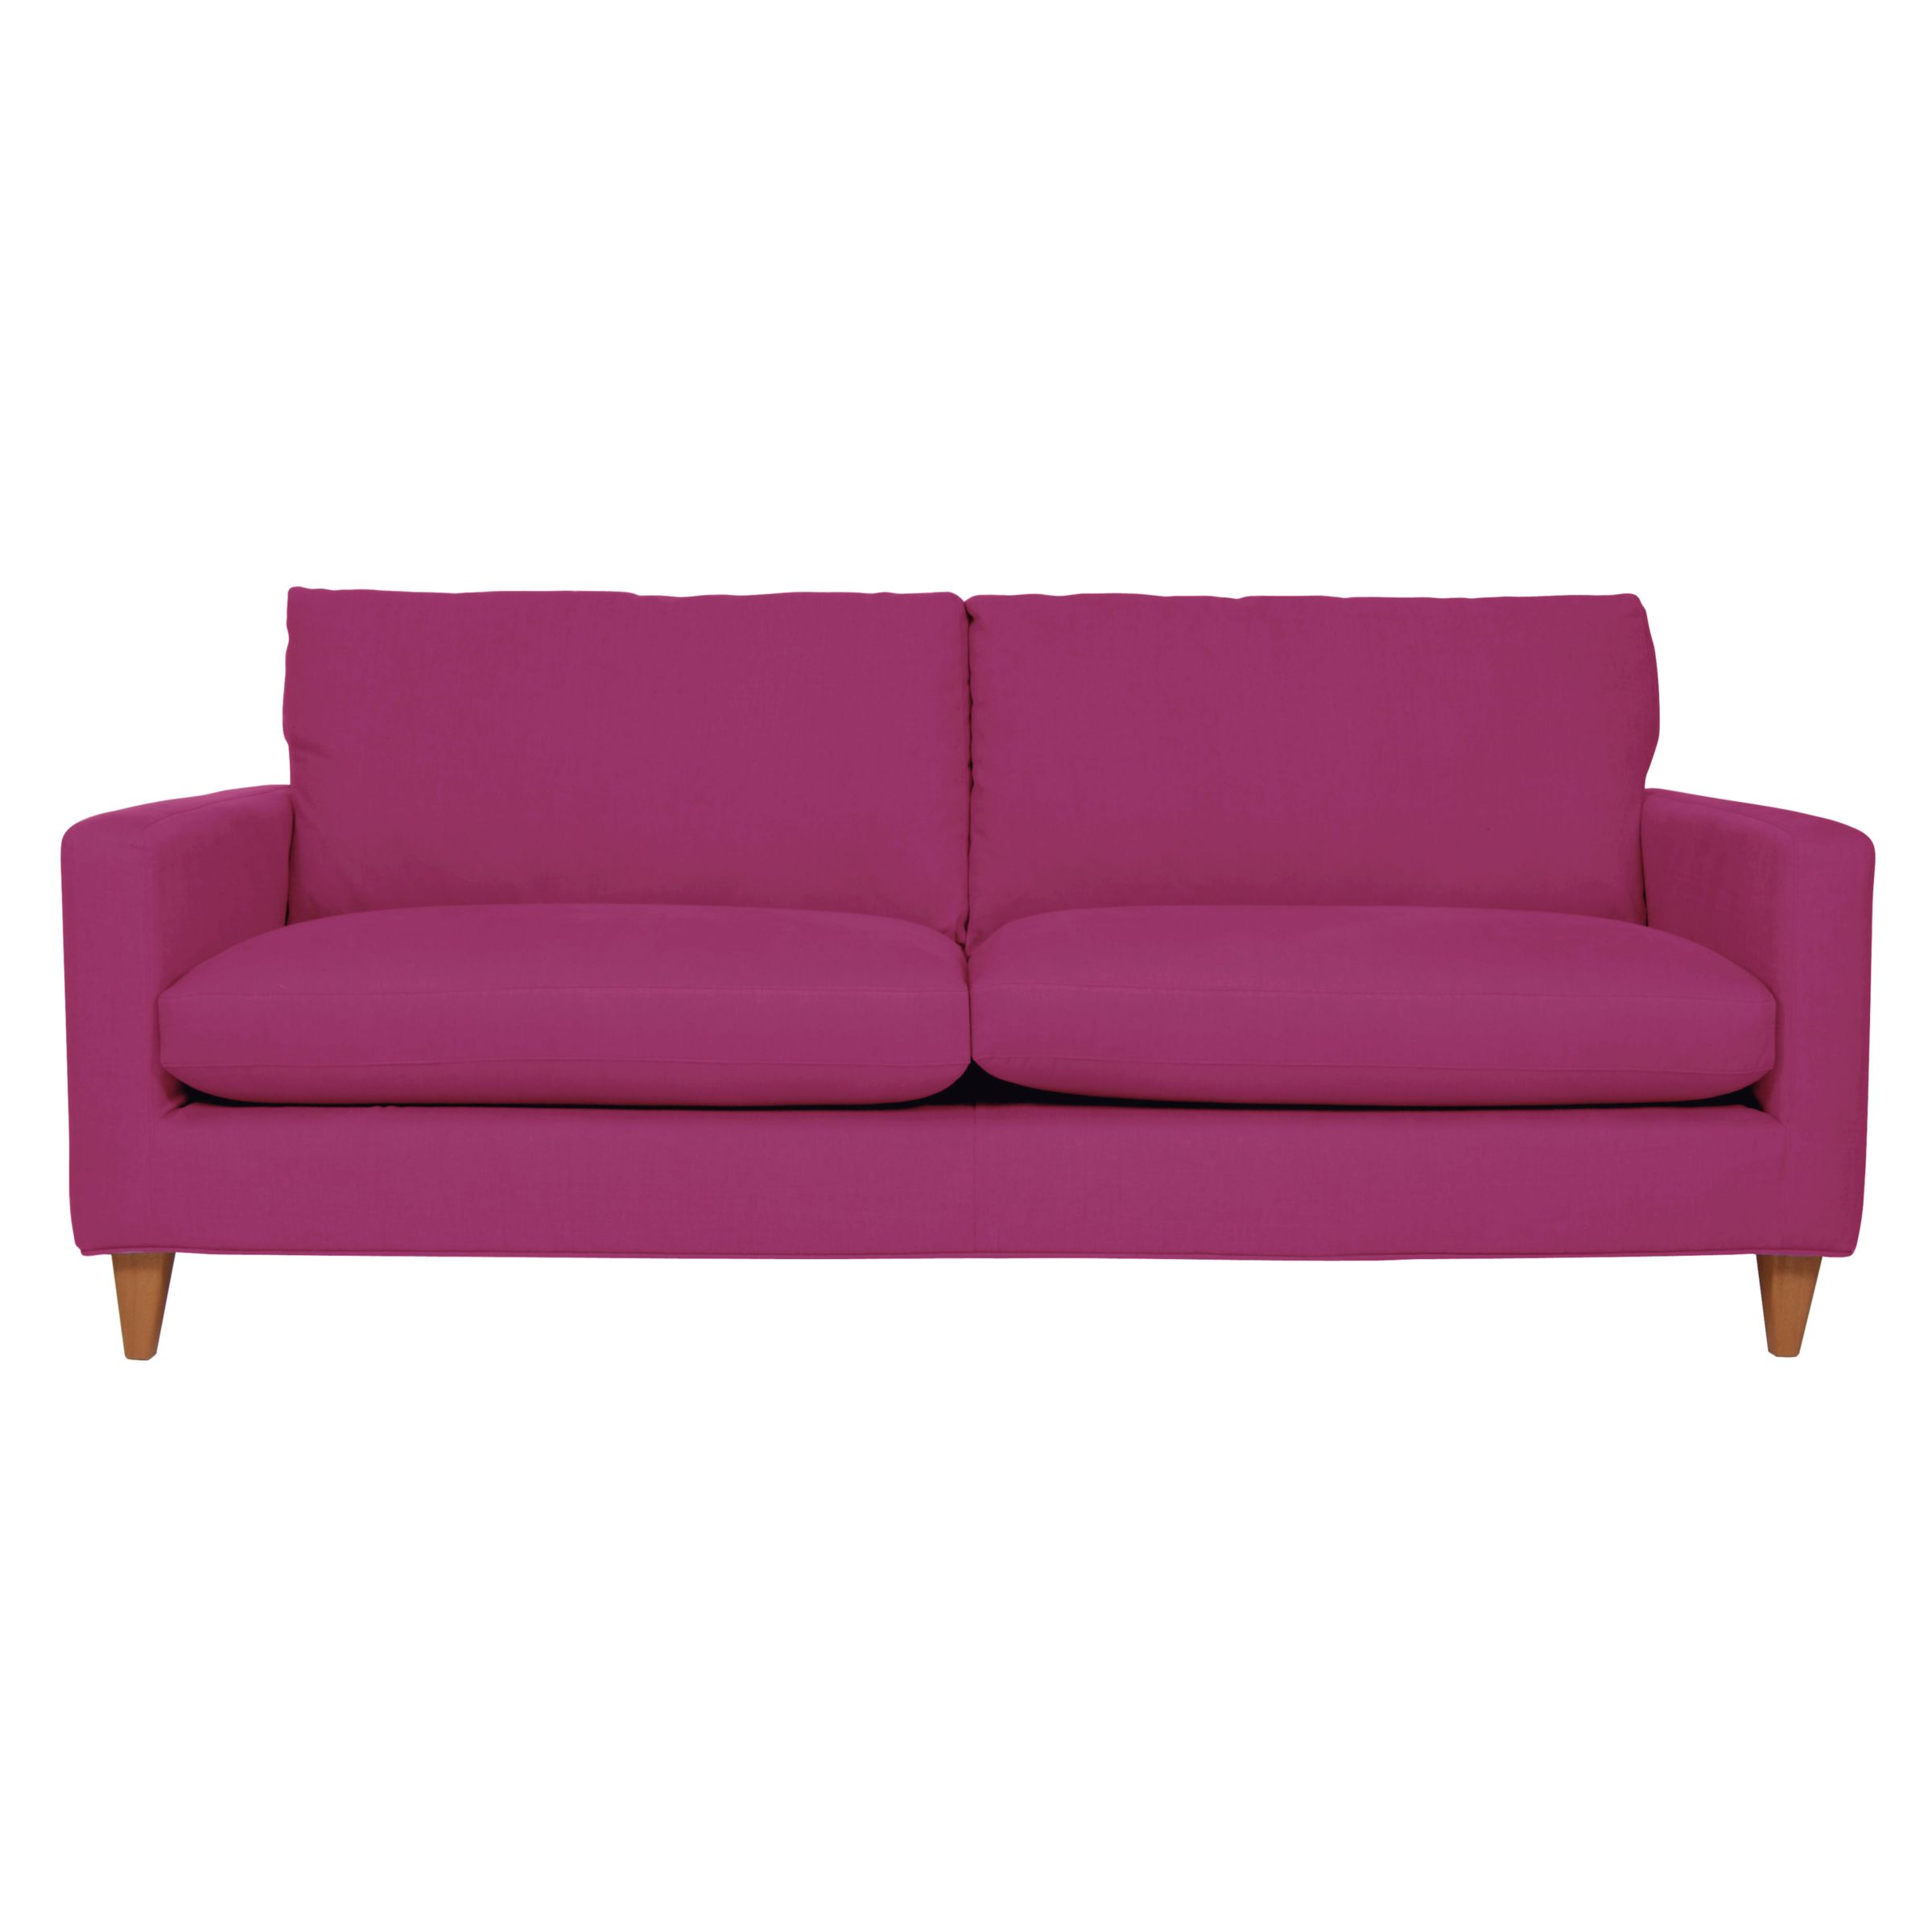 John Lewis Bailey Grand Sofa, Oban Hot Pink, width 214cm